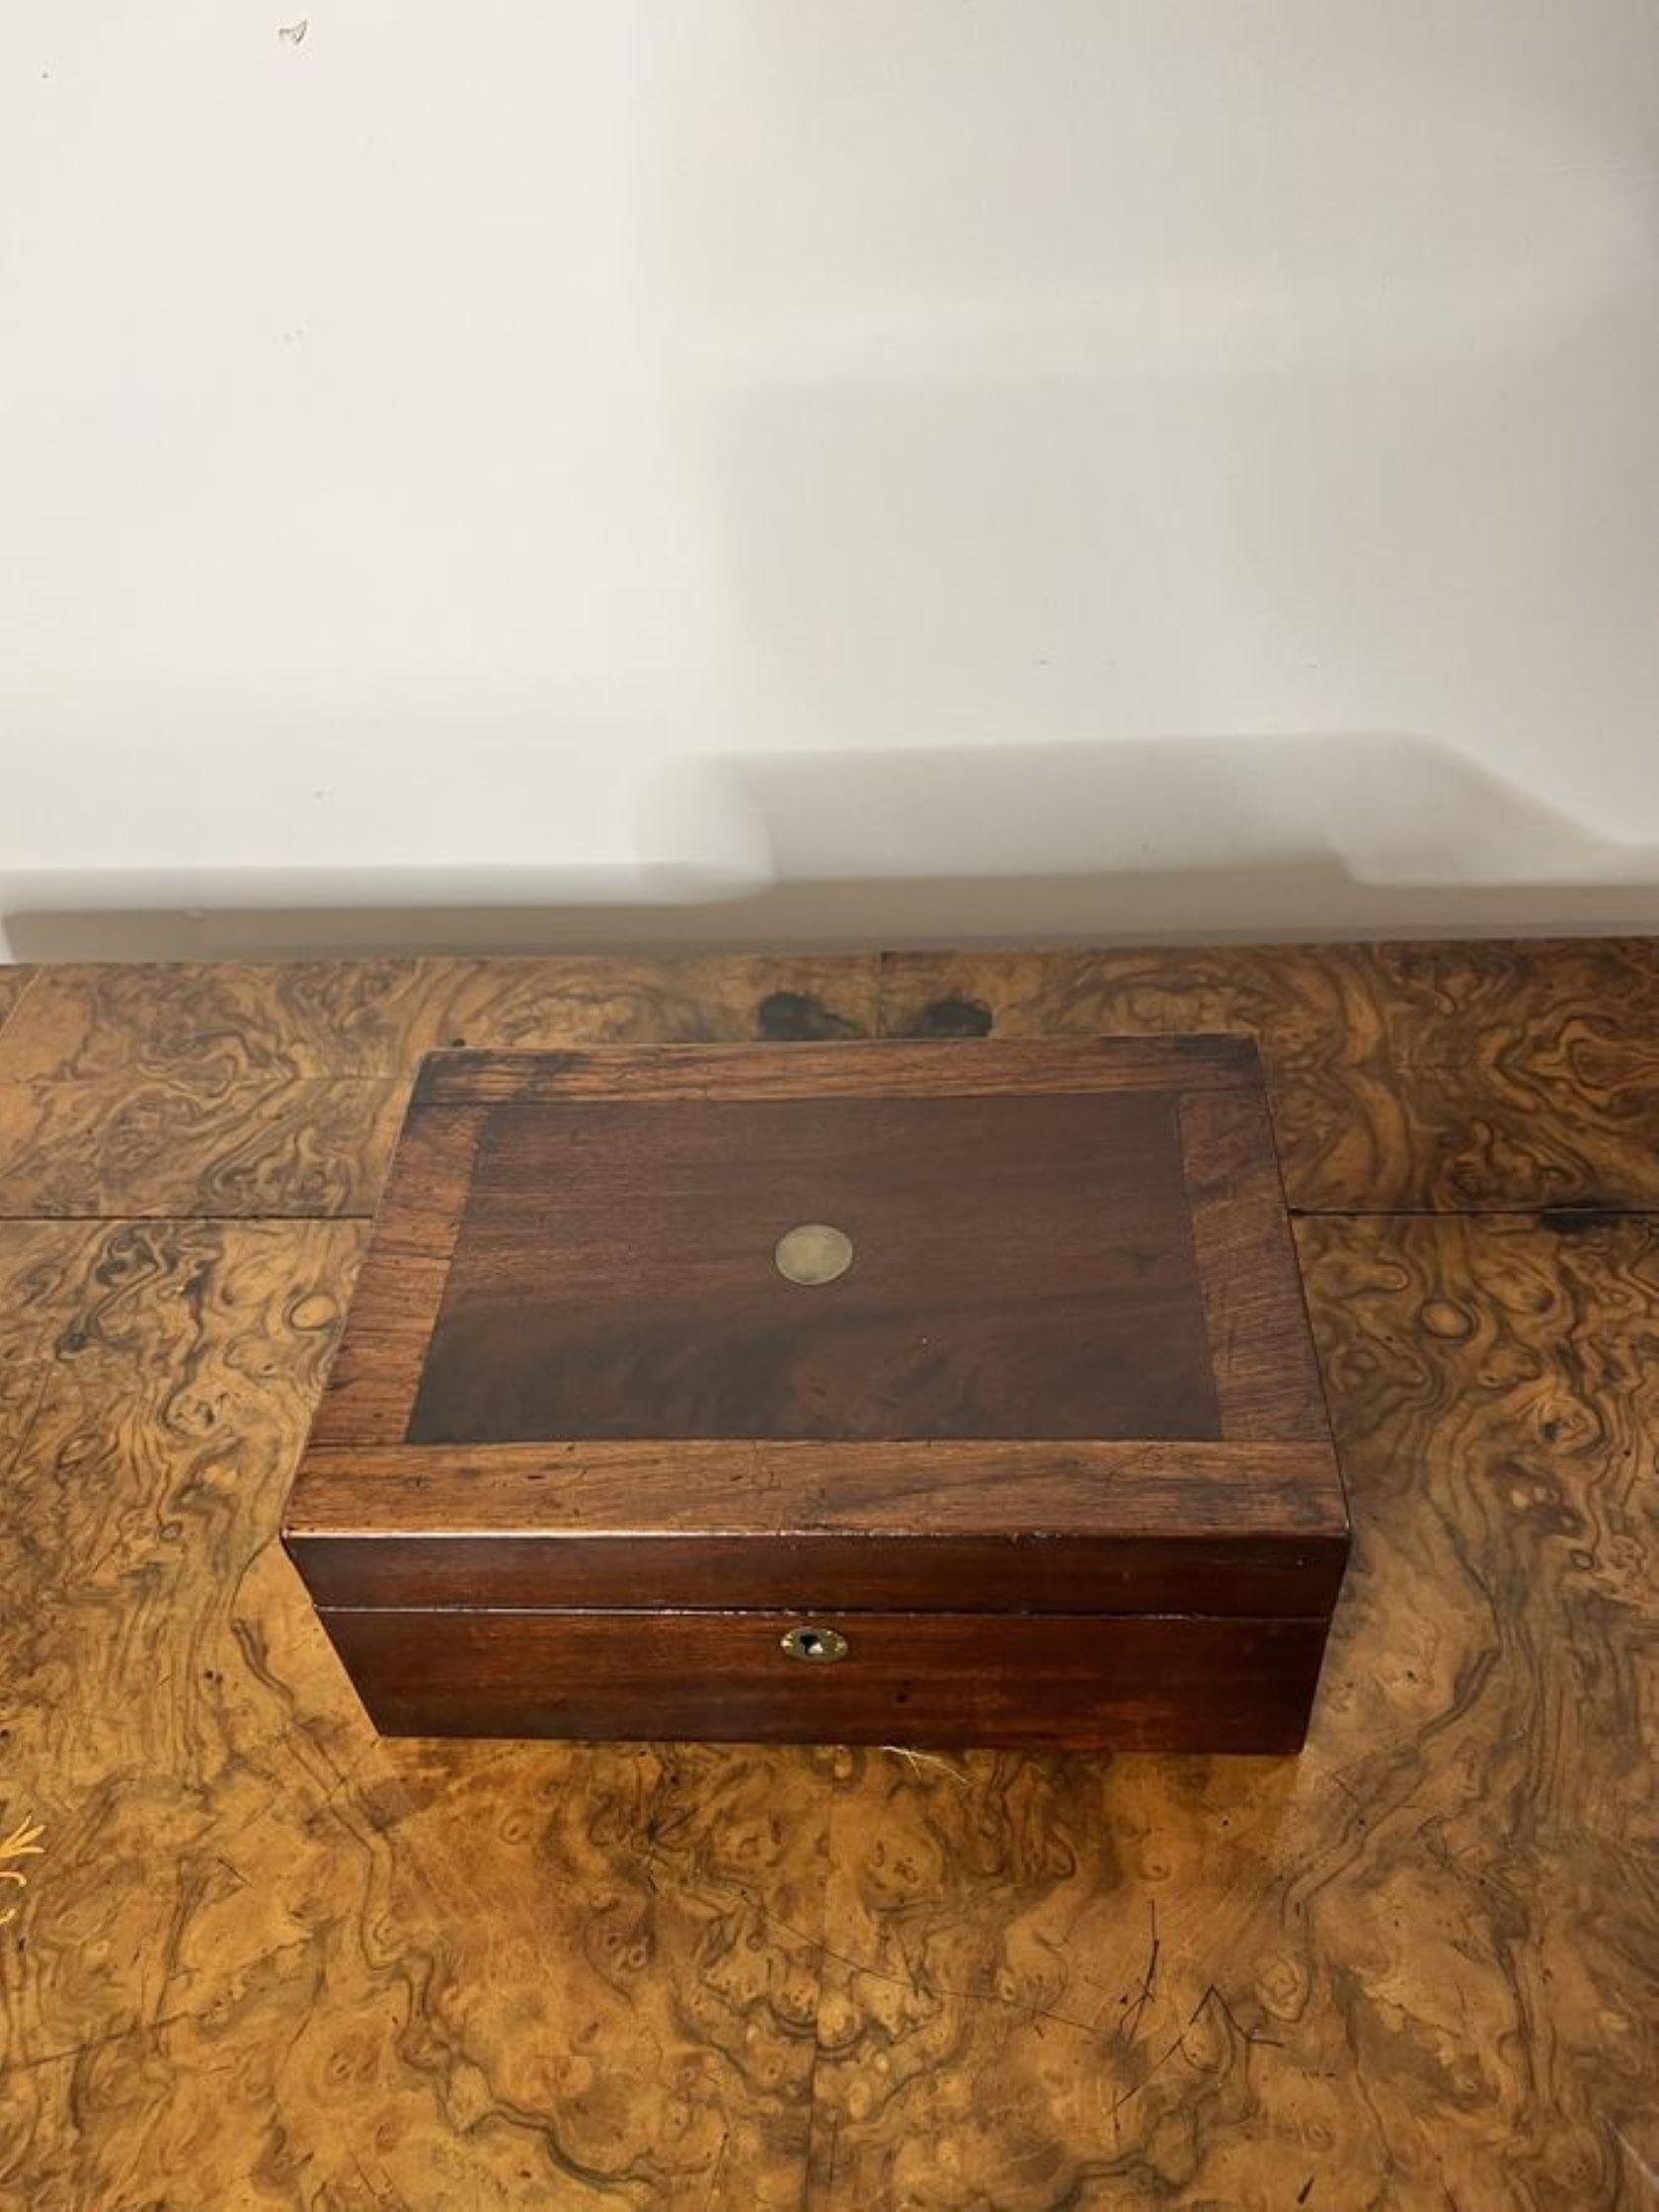 Antigua caja de almacenaje victoriana de caoba con interior rojo.

D. 1860